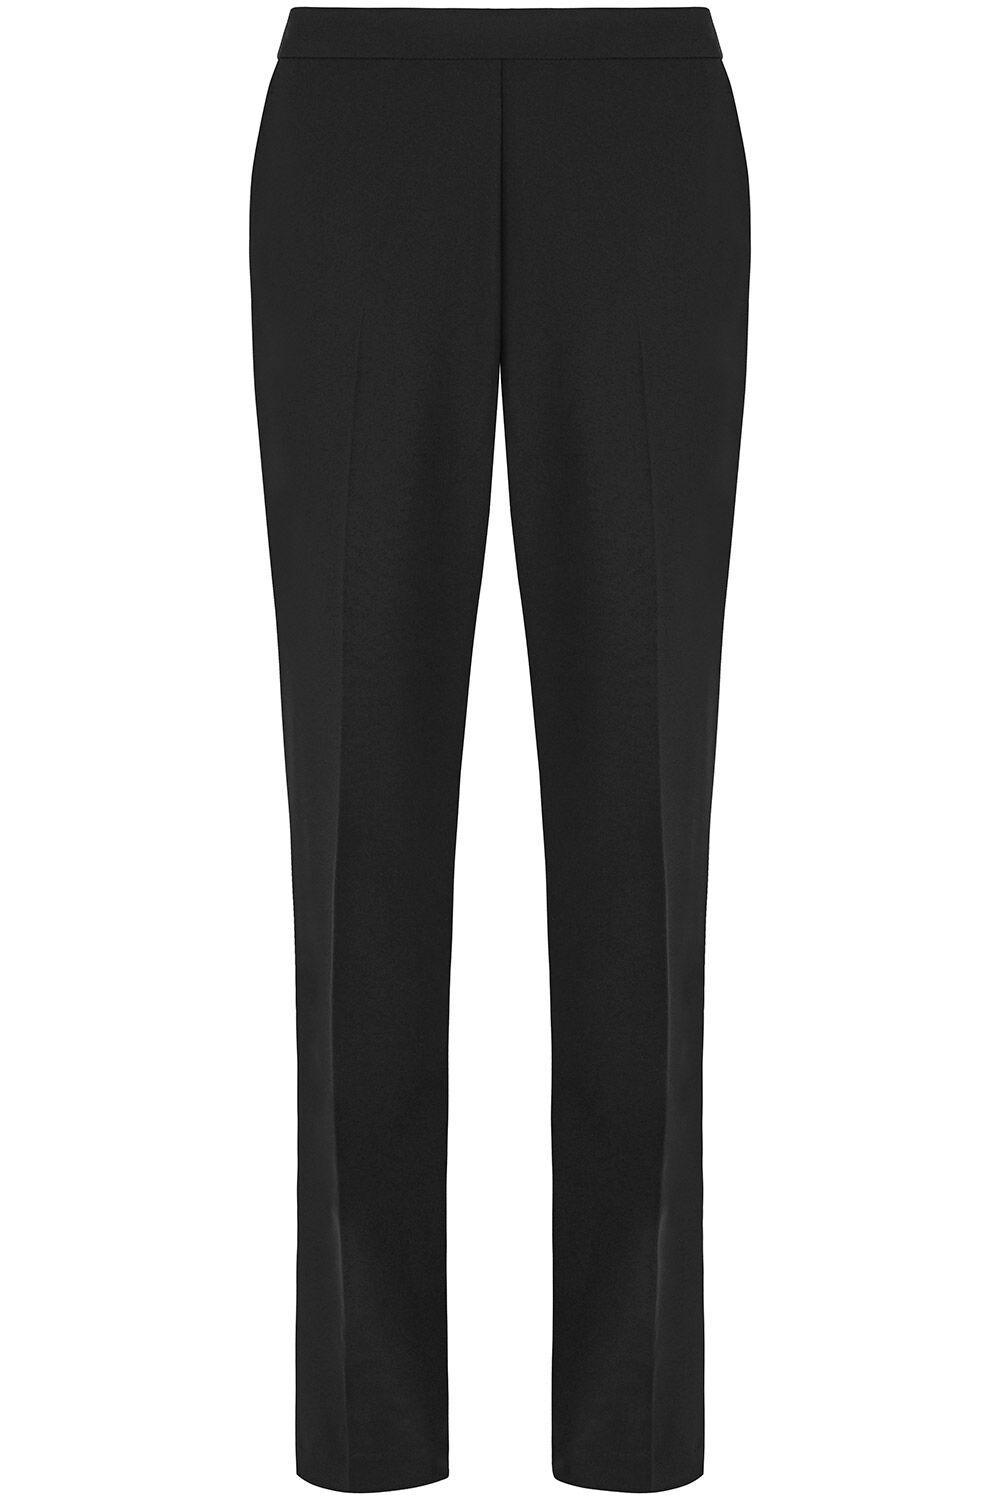 Bonmarche Plain Straight Leg Pull On Trouser - Black, Size: 12